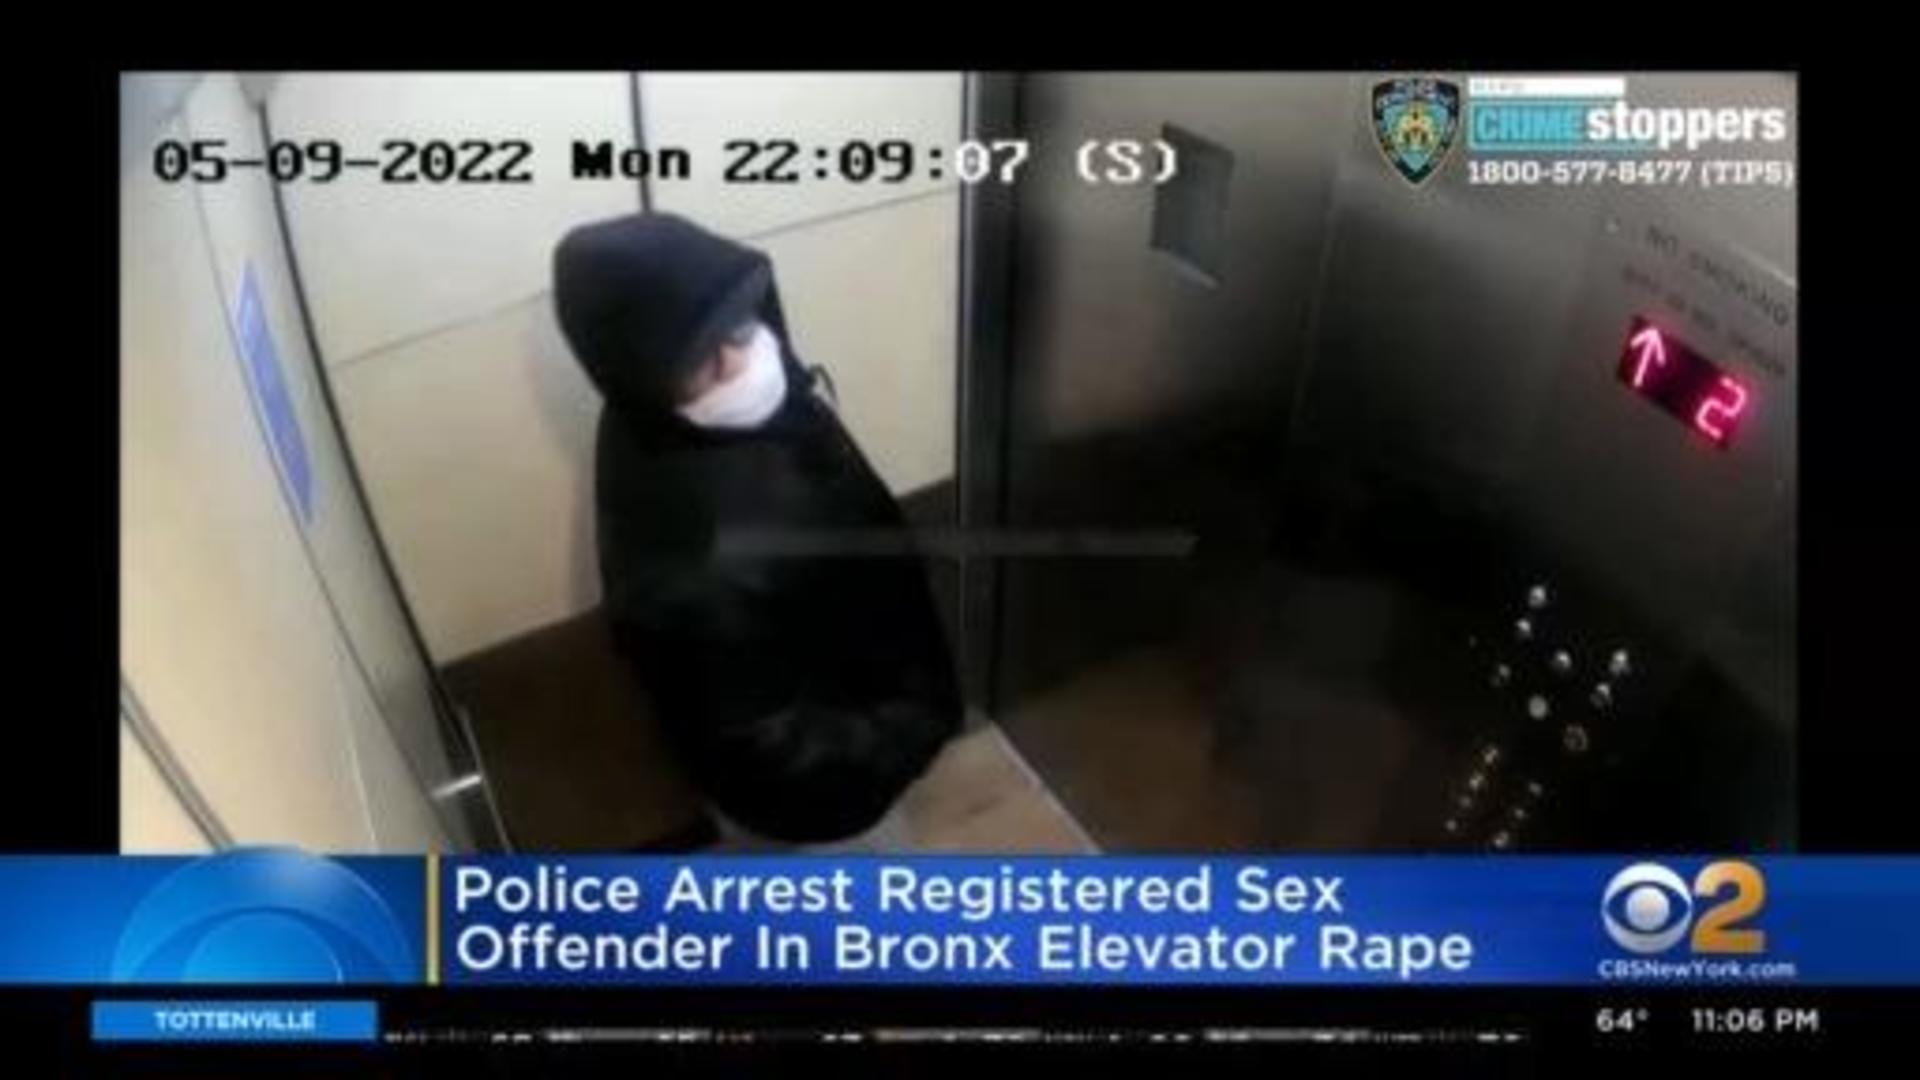 Download Real Rape Videos - Police arrest registered sex offender in Bronx elevator rape - CBS New York